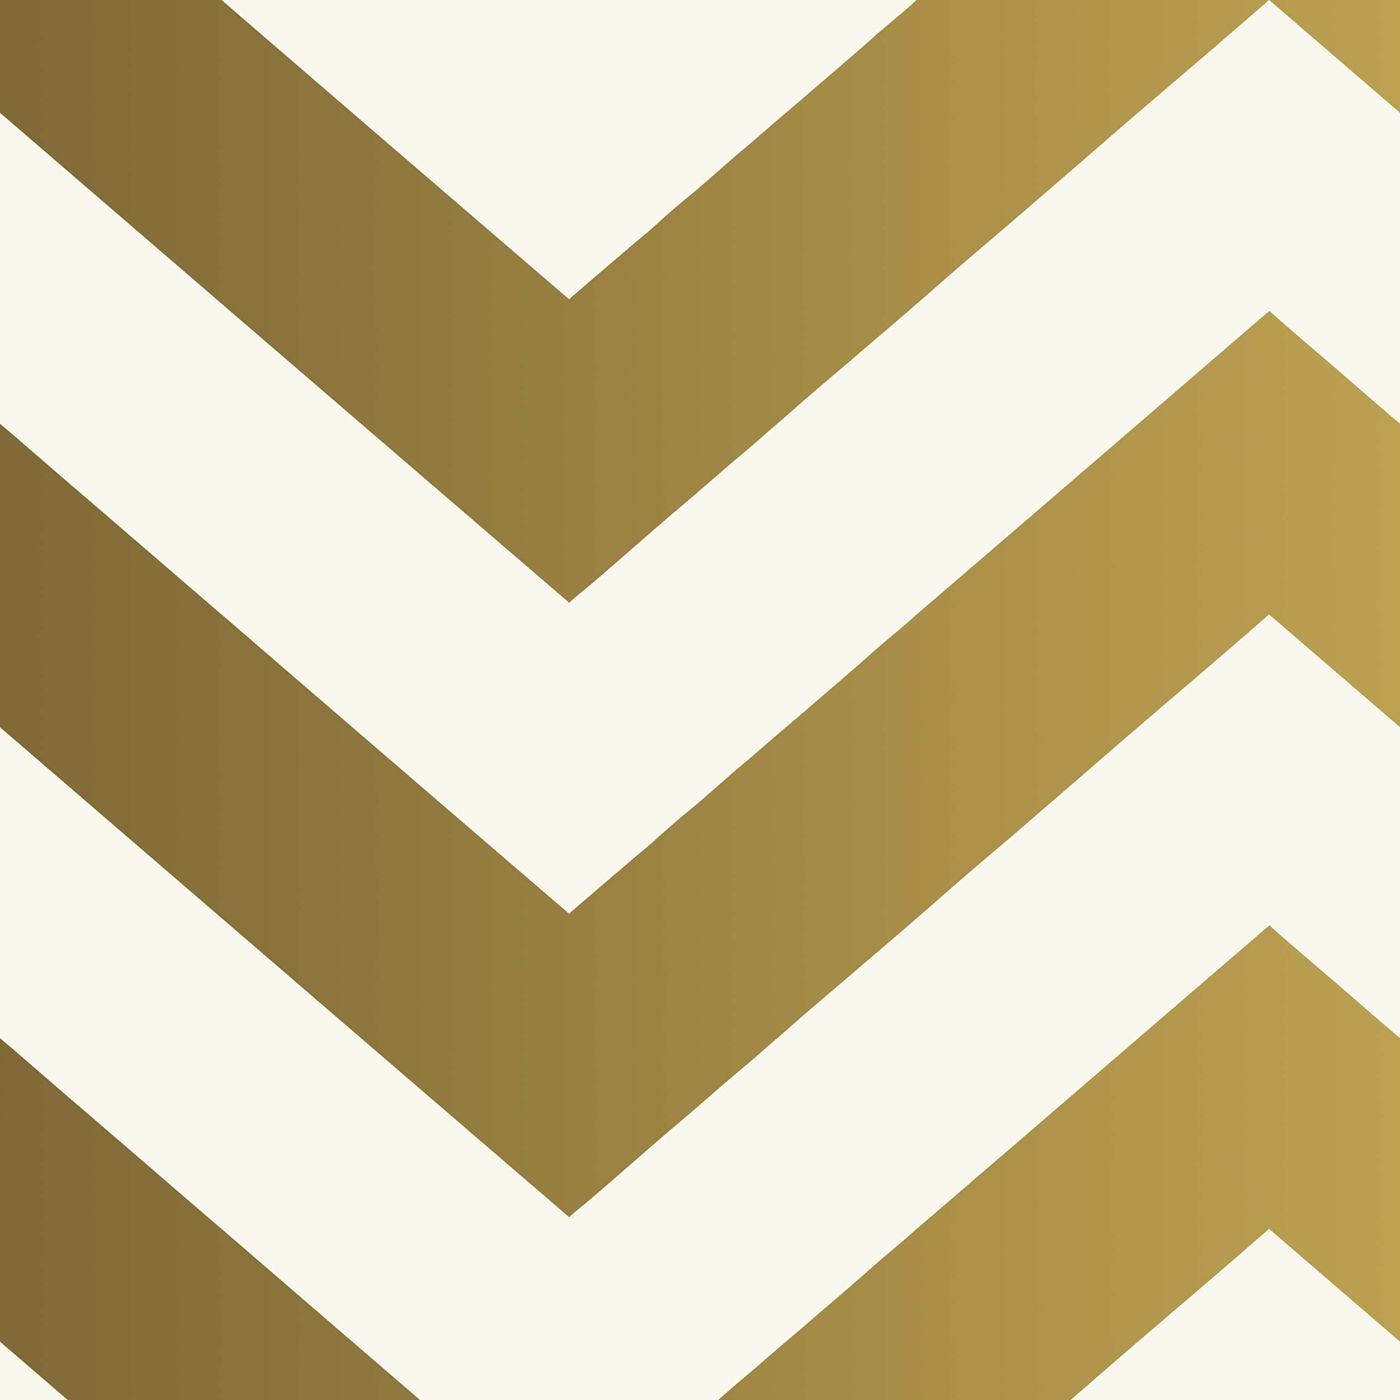 Stripes Of Gold Wallpaper - ImgMob